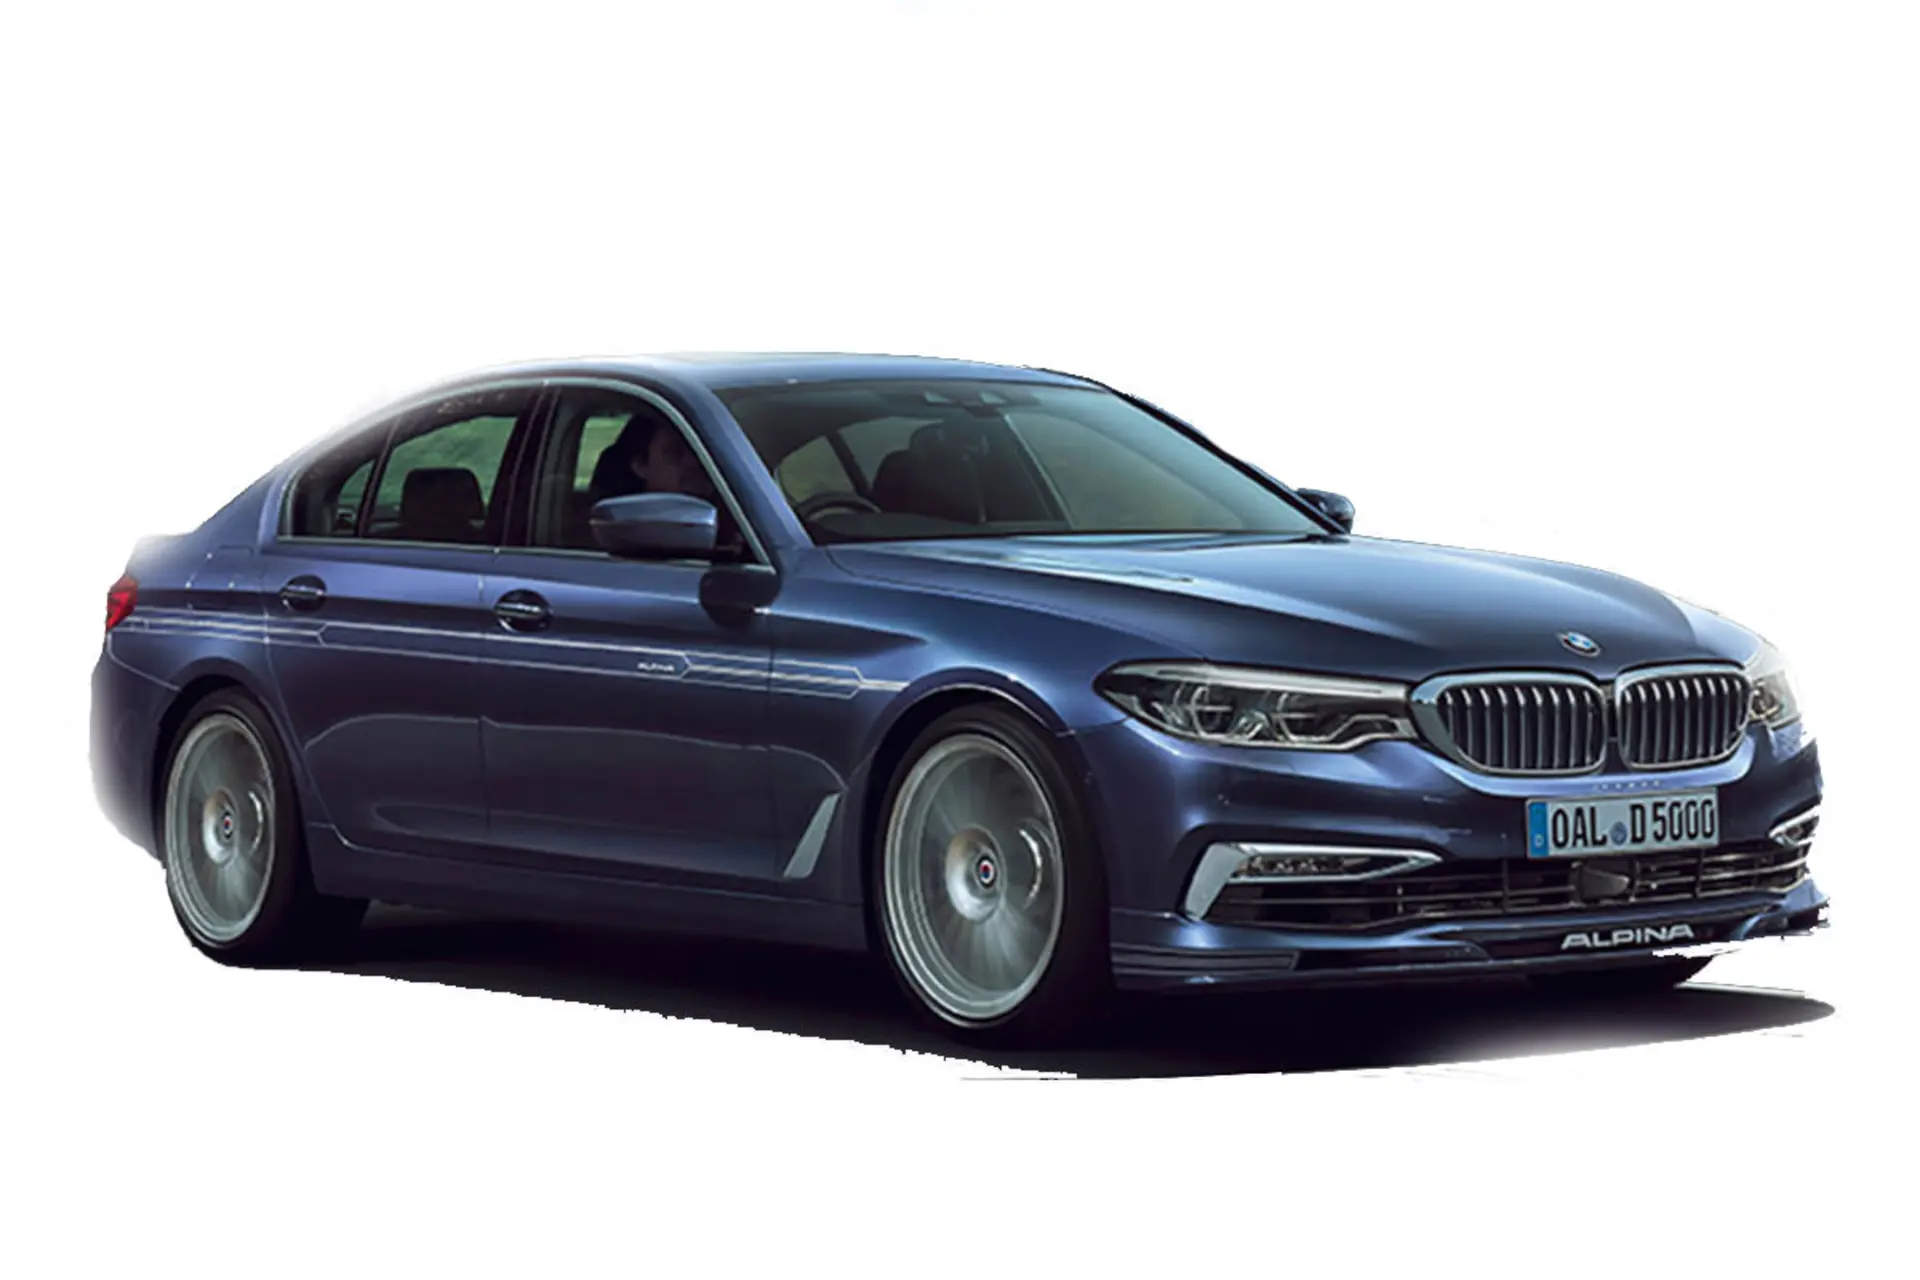 BMW Alpina D5 S 2020